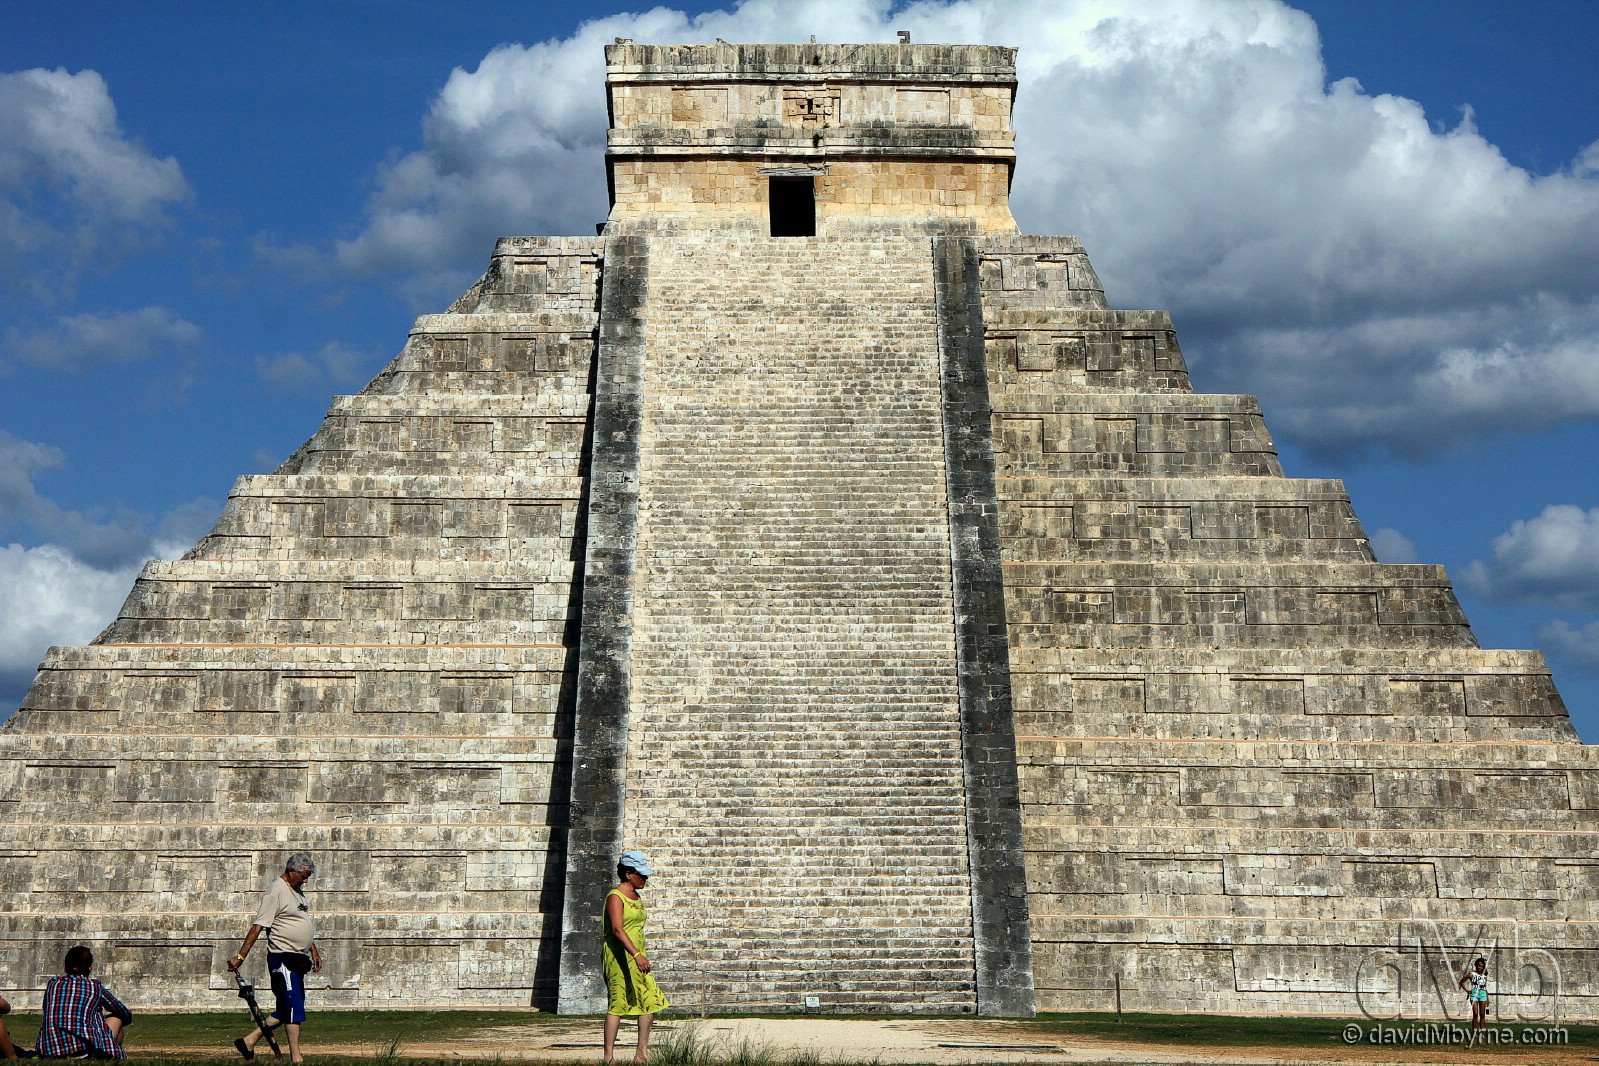 El Castillo / Pyramid of Kukulcan, Chichén Itzá, Yucatán Peninsula, Mexico. May 3rd 2013 (EOS 60D || Tamron 28-75mm || 54mm, 1/100sec, f/9.0, iso100)